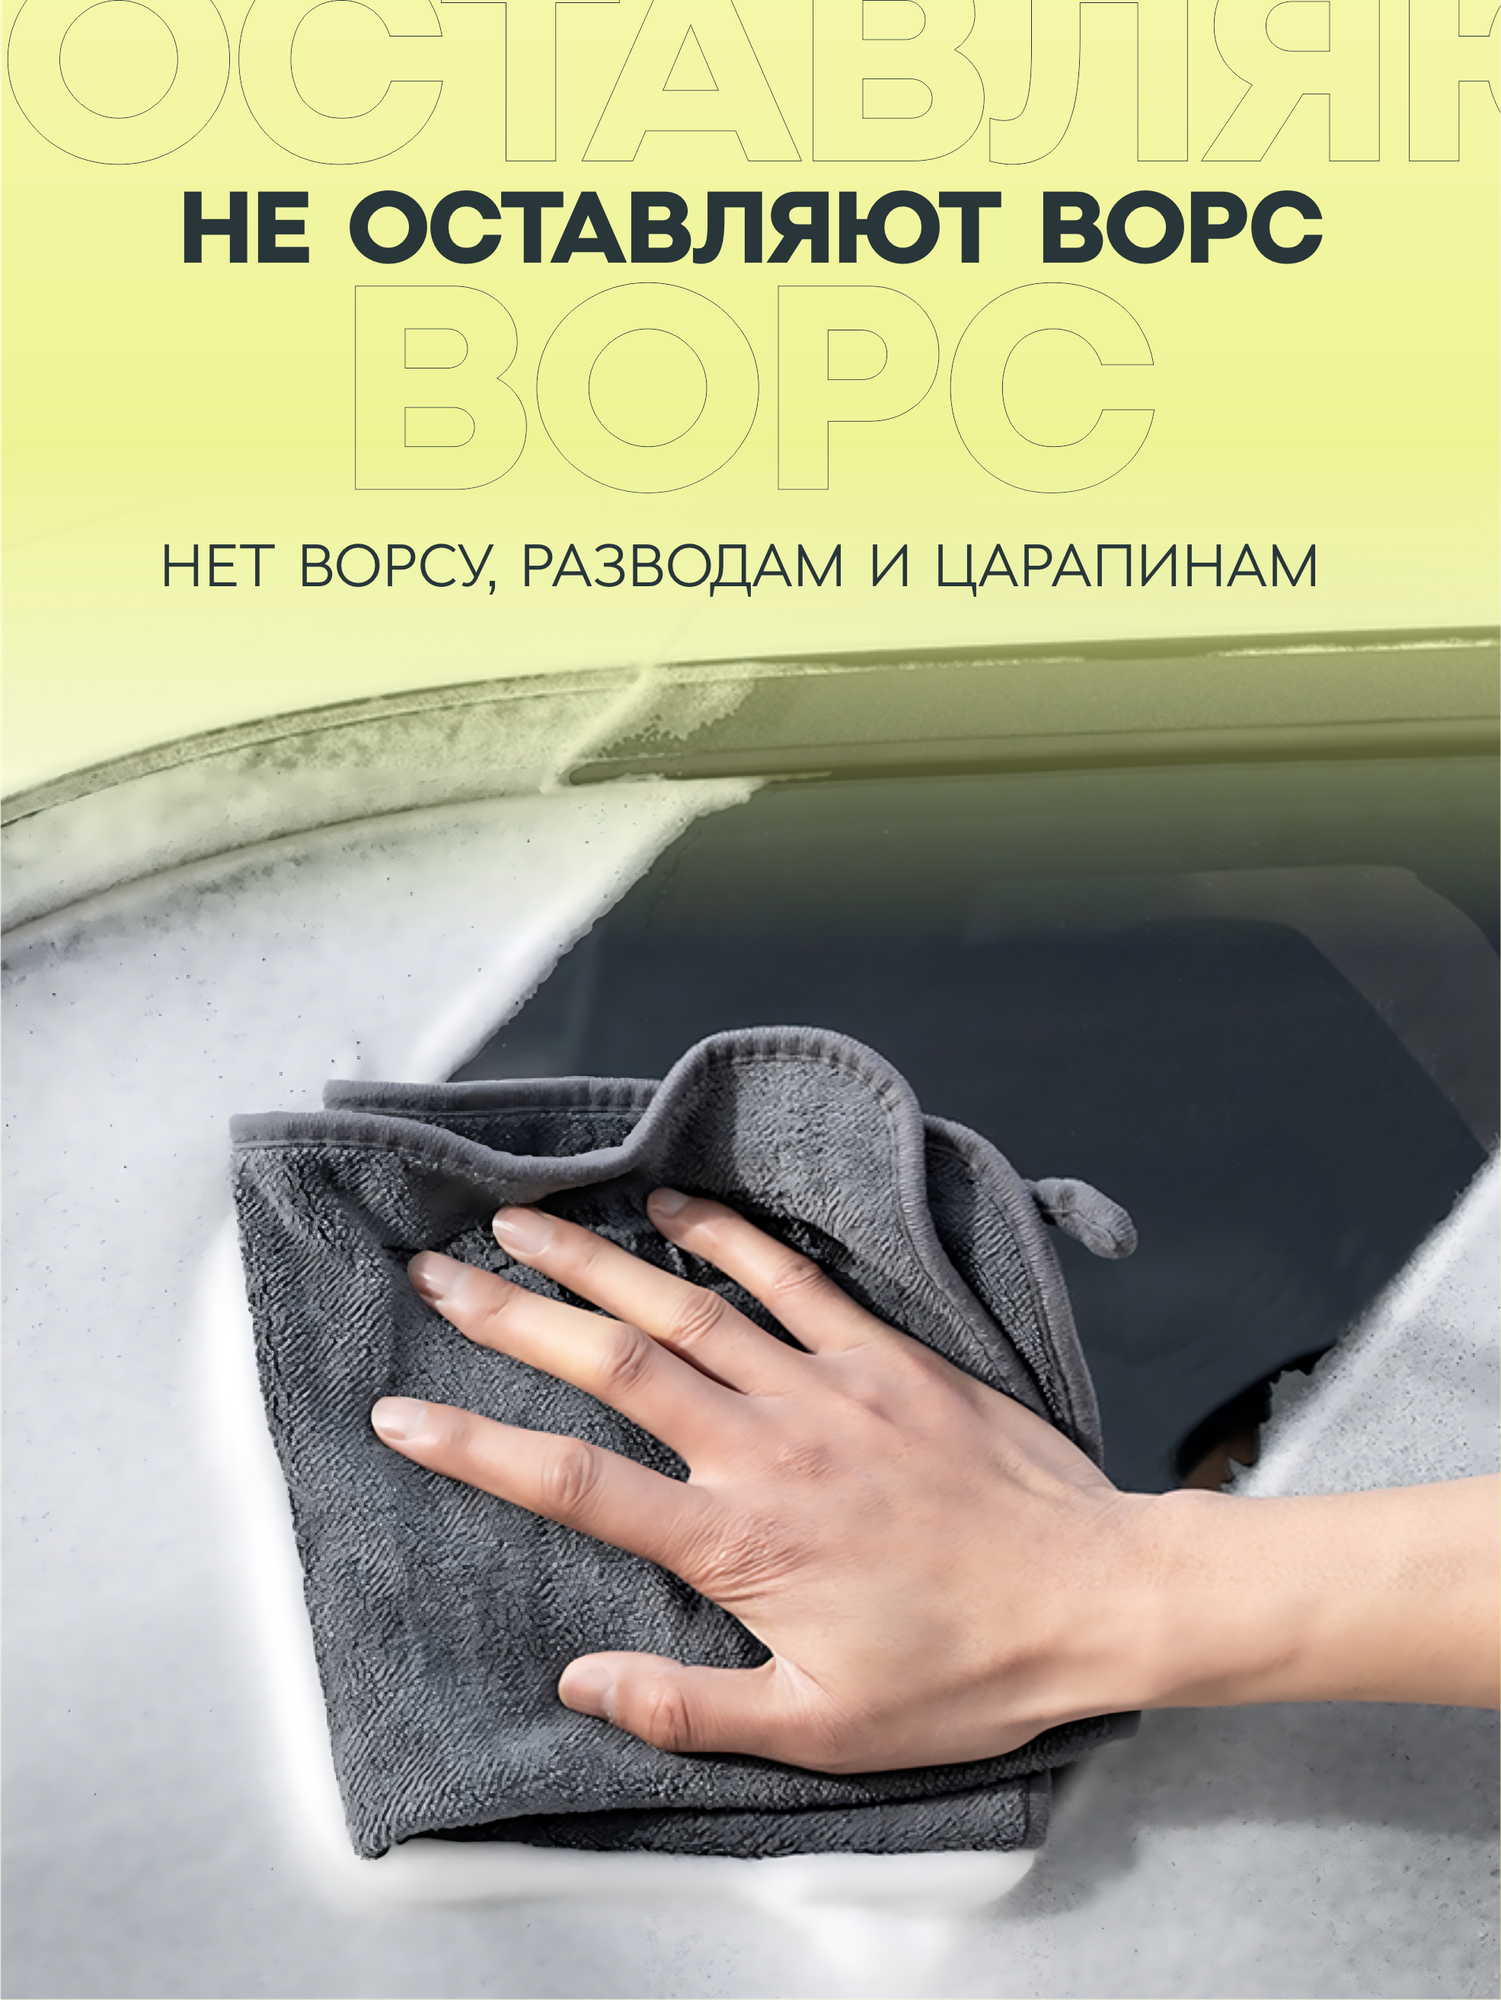 Полотенце для автомобиля из микрофибры, тряпка для мытья автомобиля, автополотенце для сушки кузова. 30х30 2 шт.